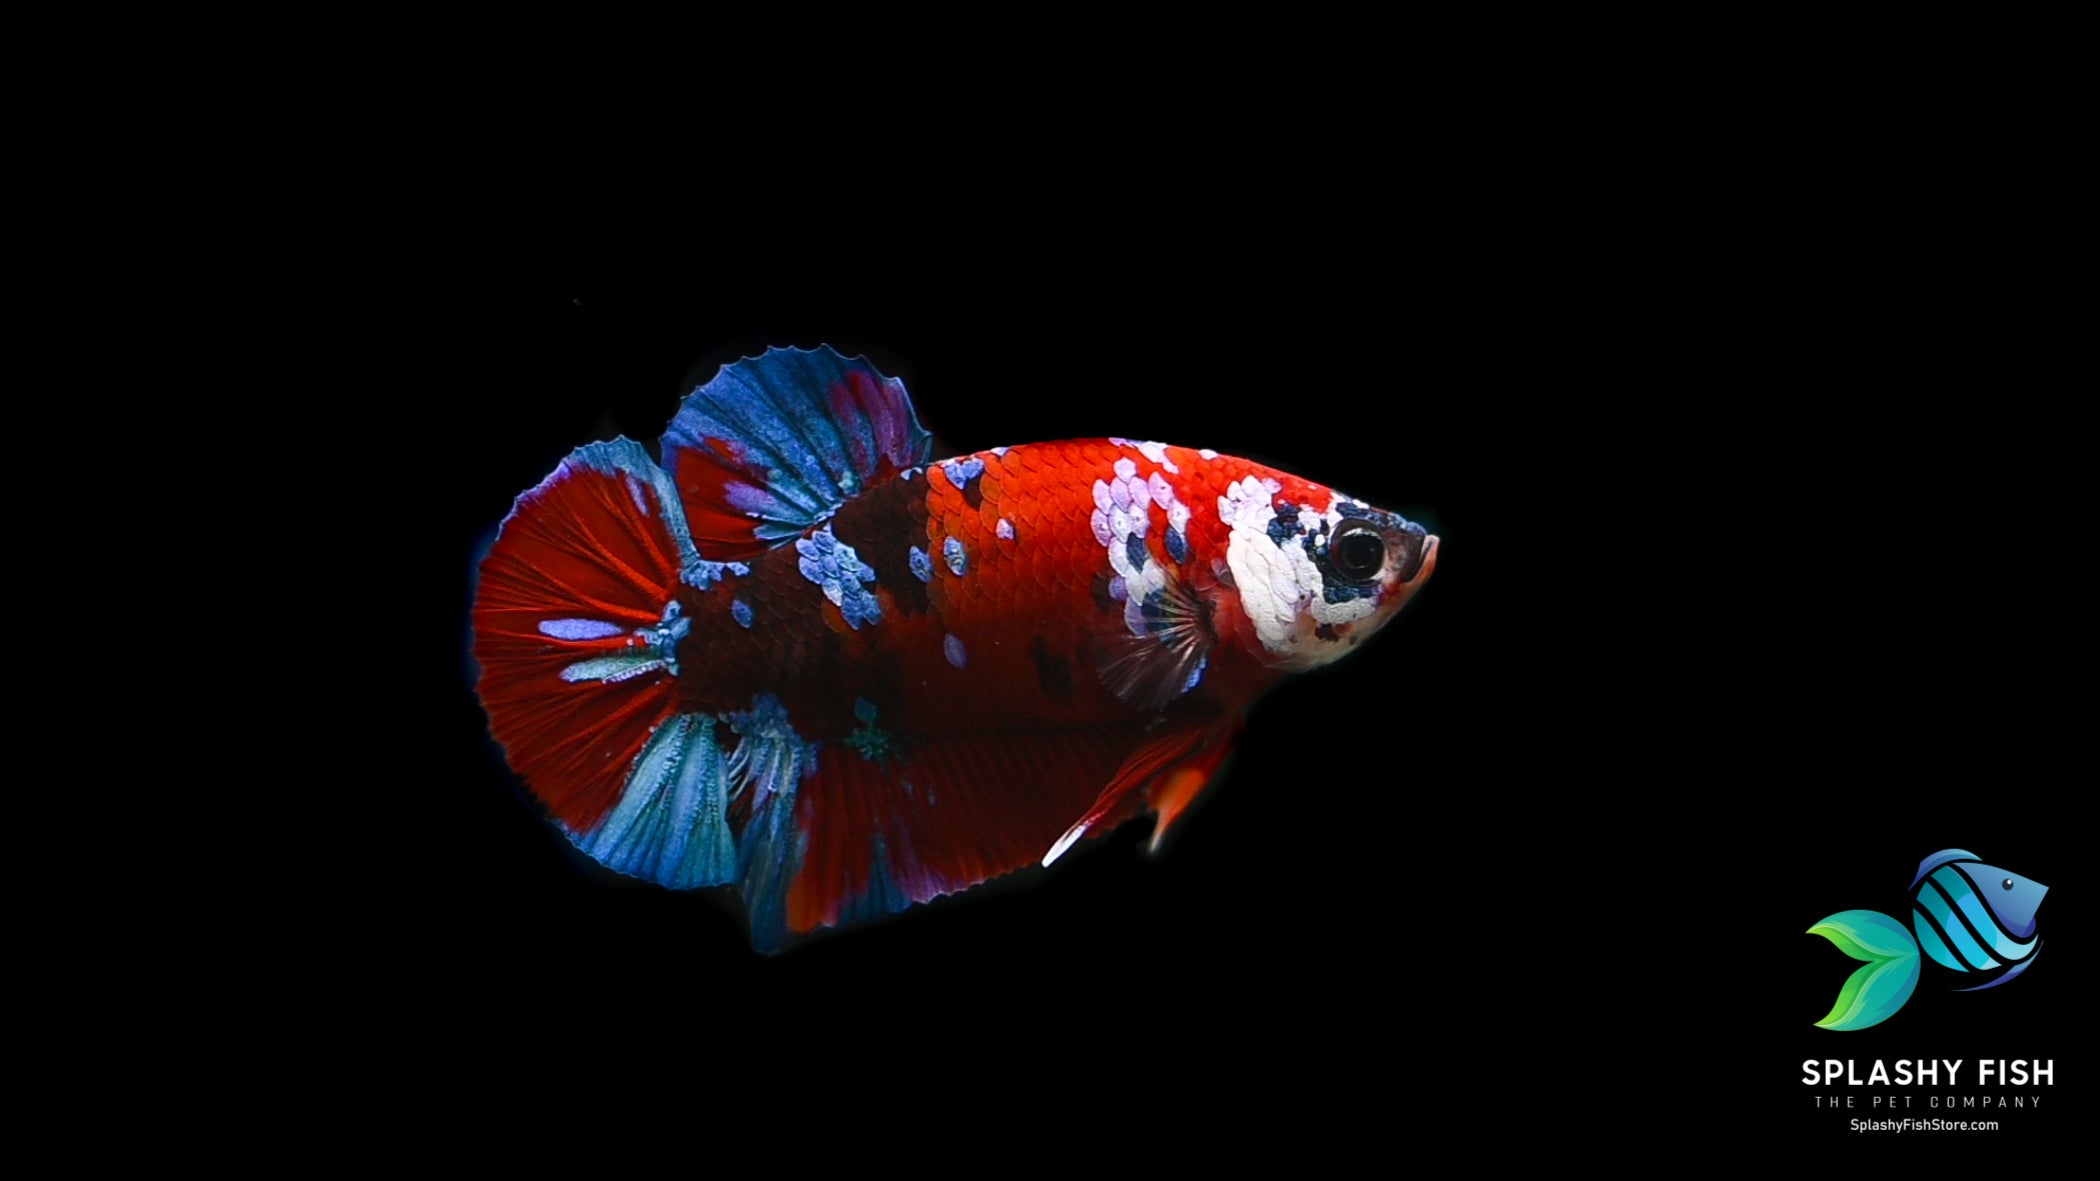 Pef zondaar Entertainment Live Giant / King Betta Fish For Sale | Splashy Fish